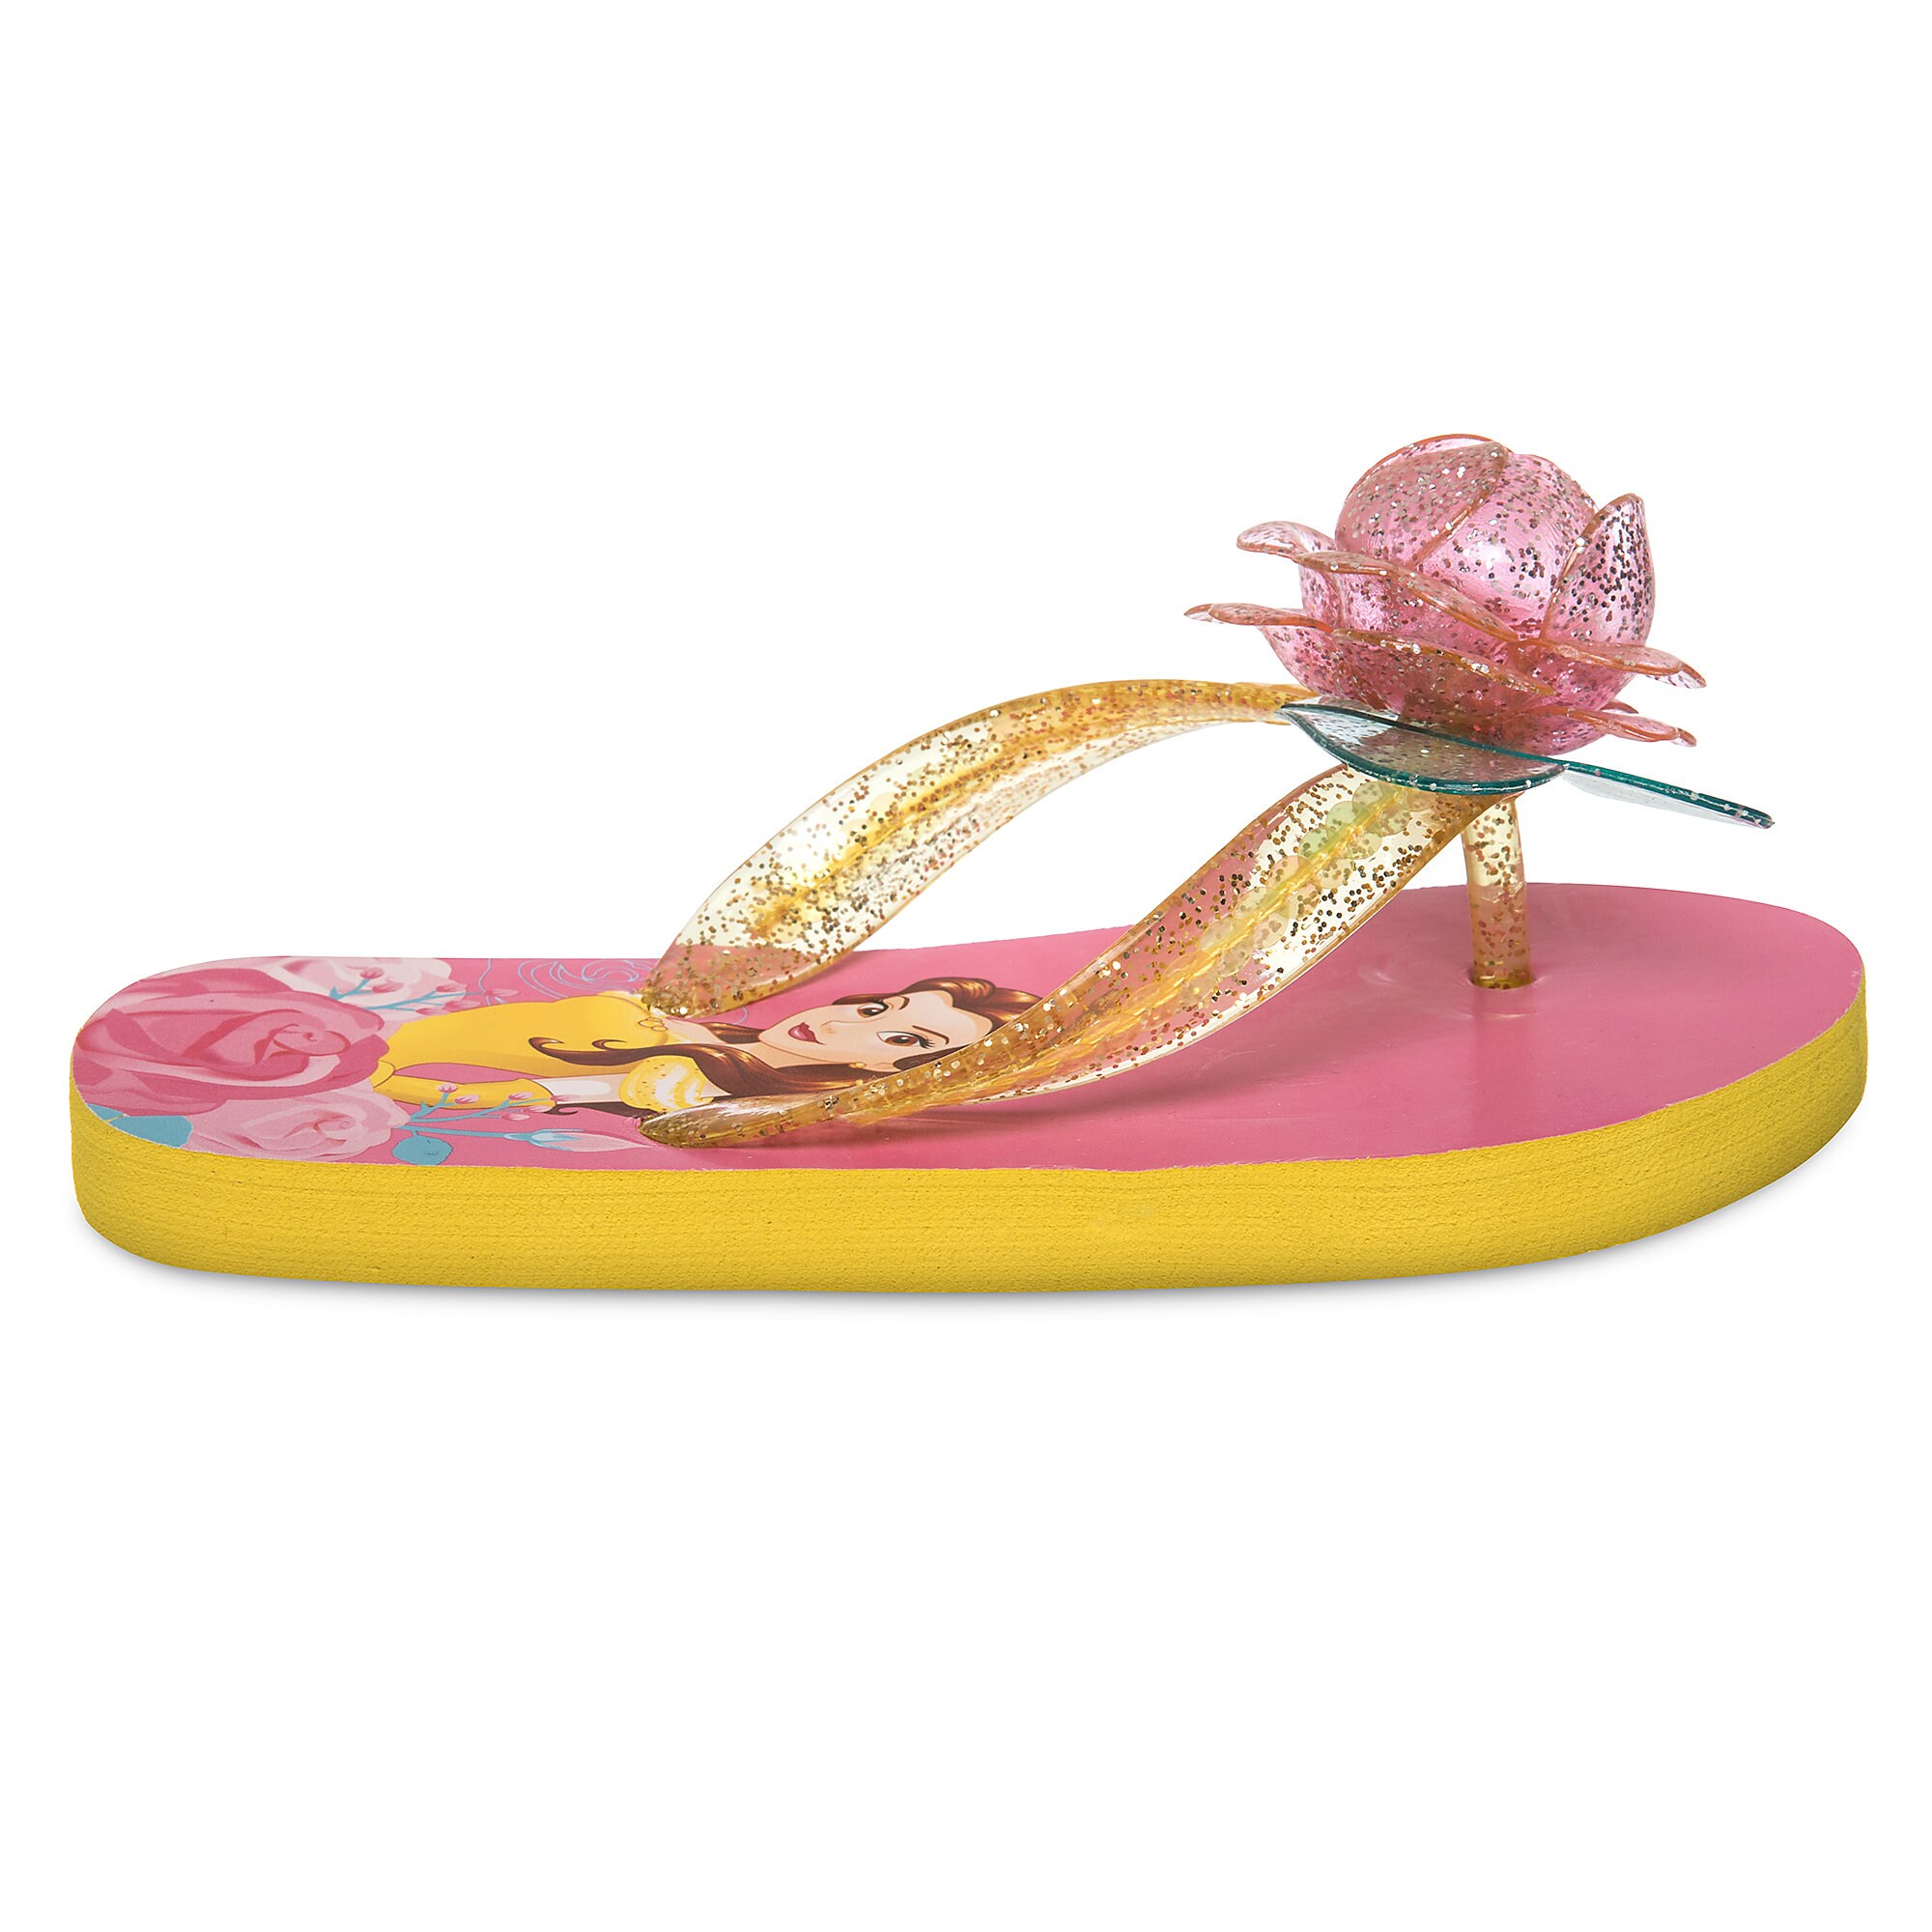 Belle Flip Flops for Kids